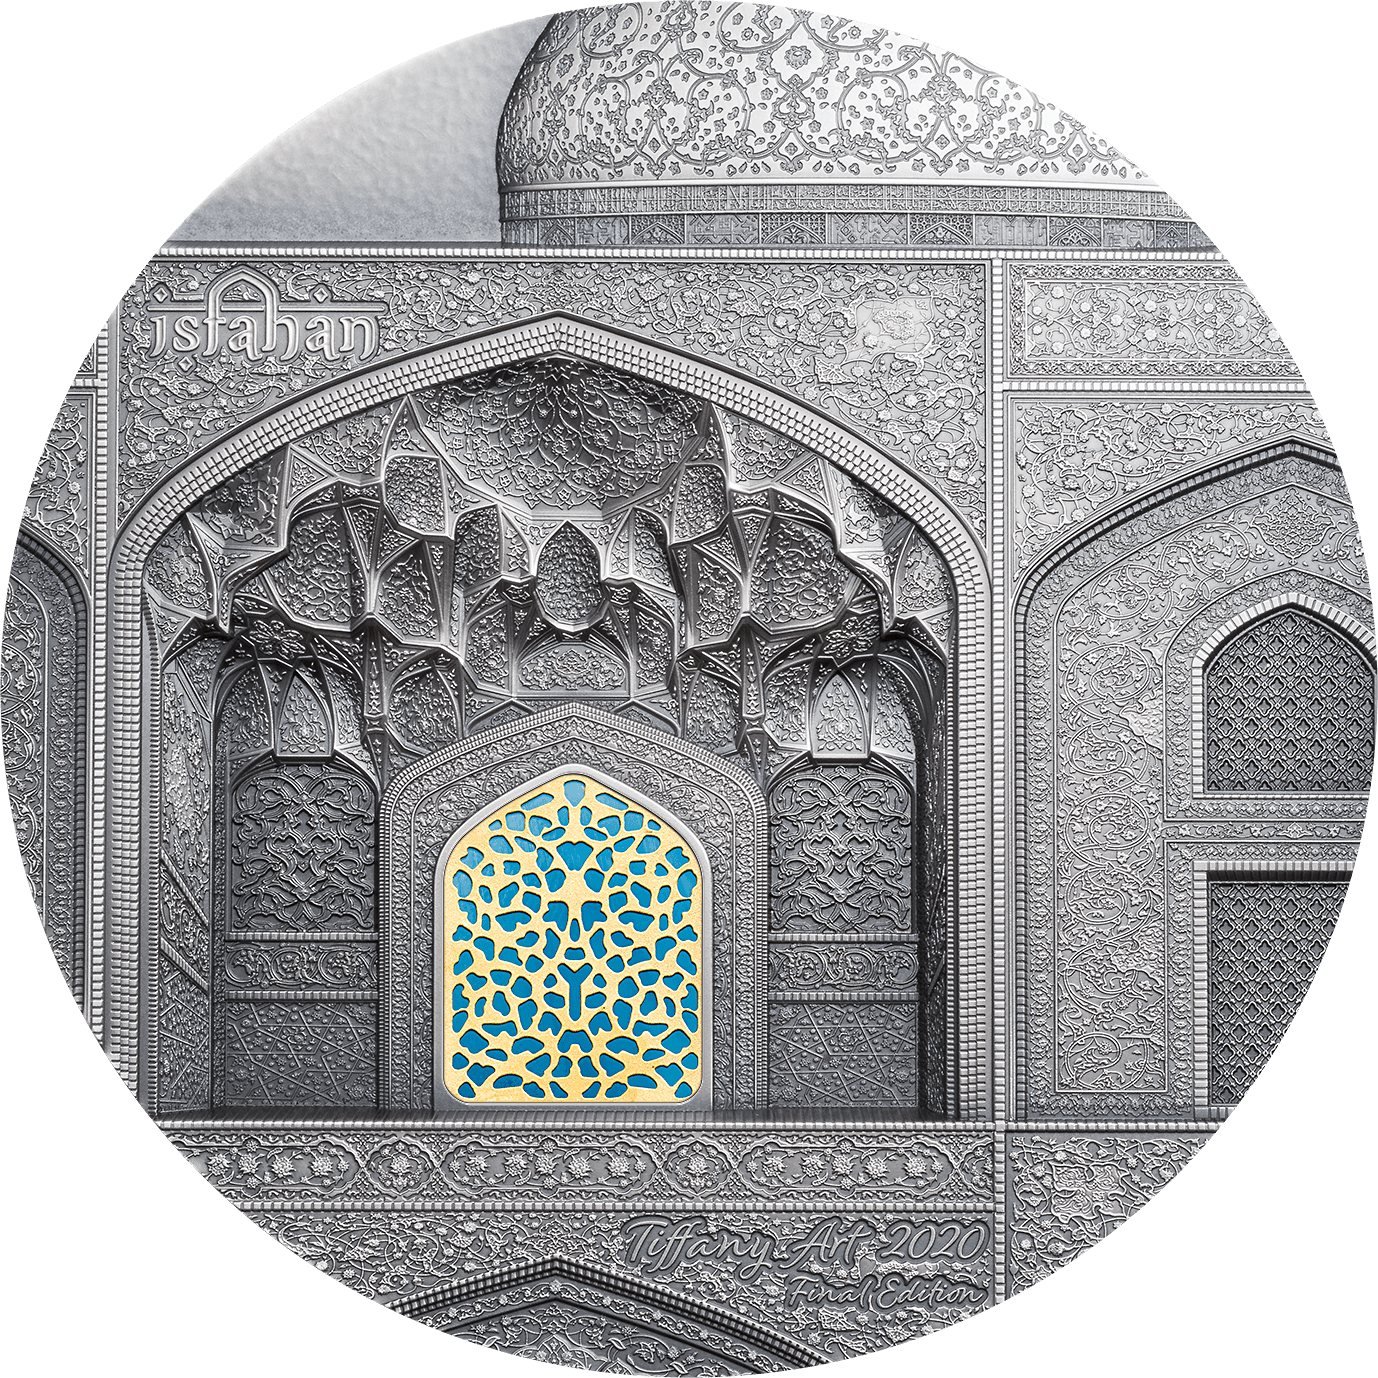 TIFFANY ART Isfahan 1 Kg Kilo Silver Coin $50 Palau 2020 - PARTHAVA COIN